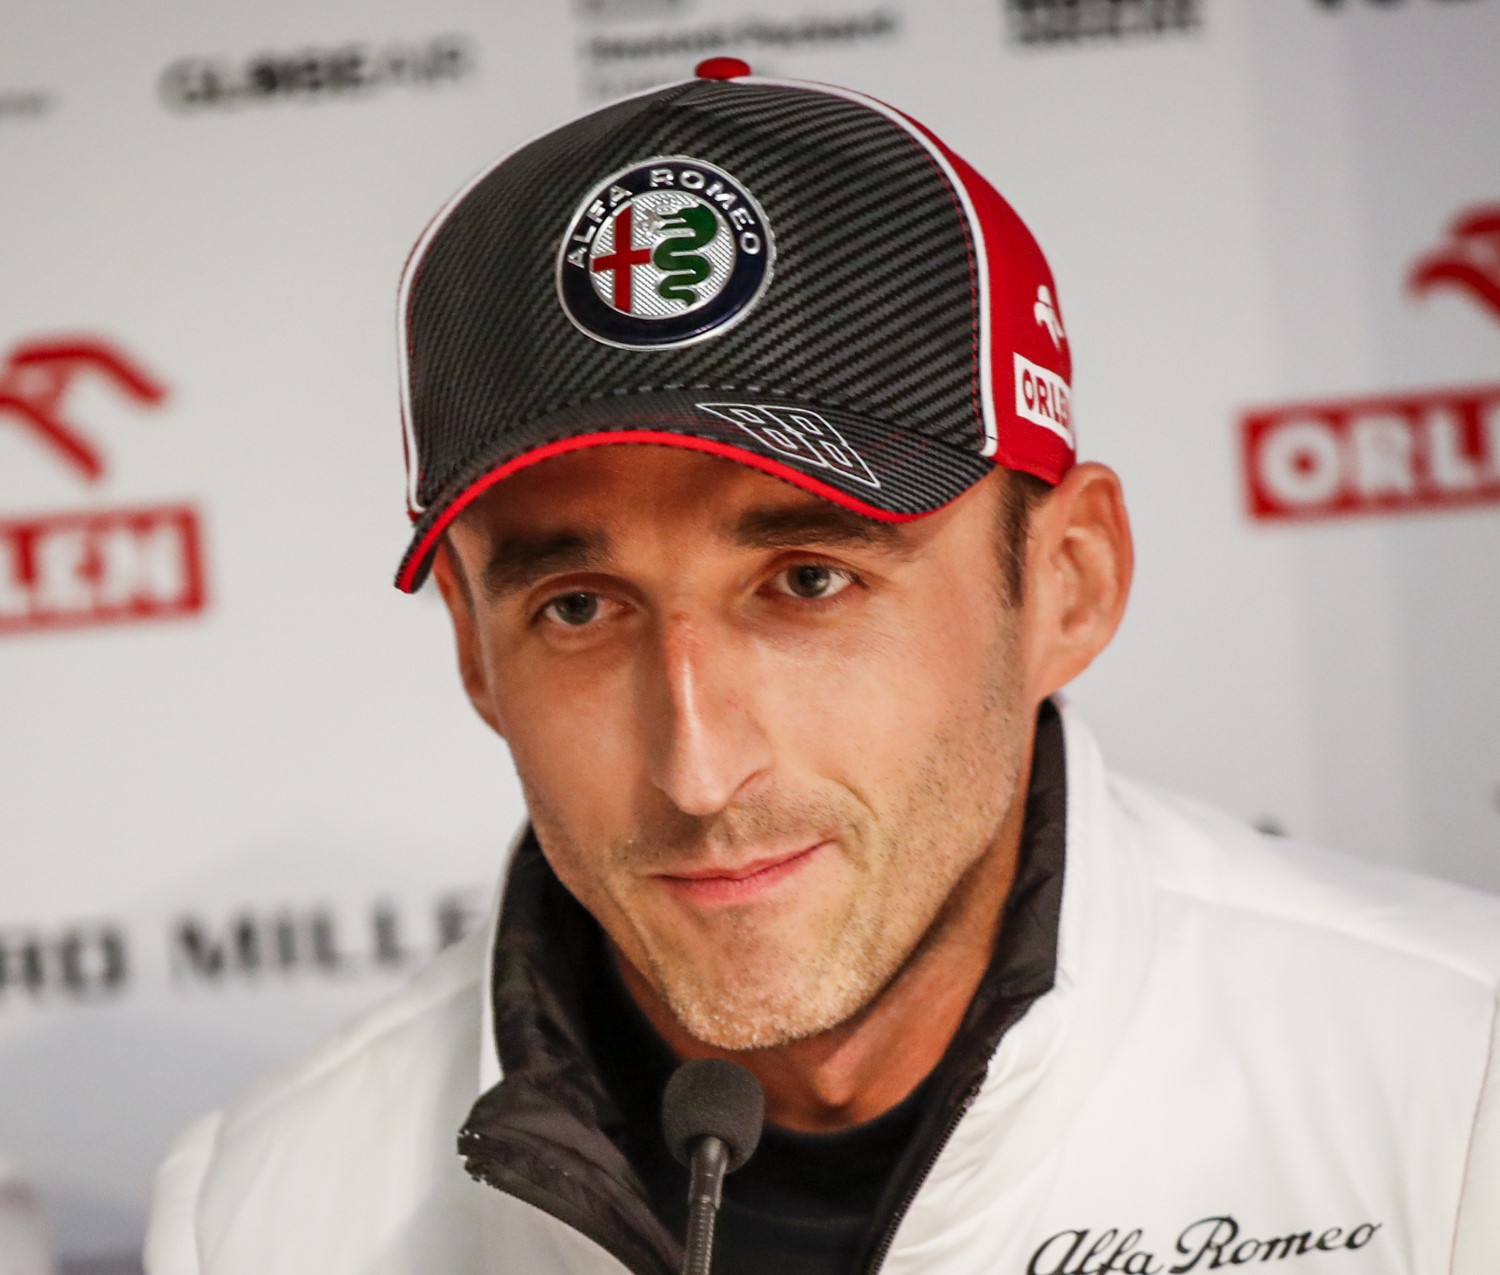 Robert Kubica - Alfa Romeo reserve driver now